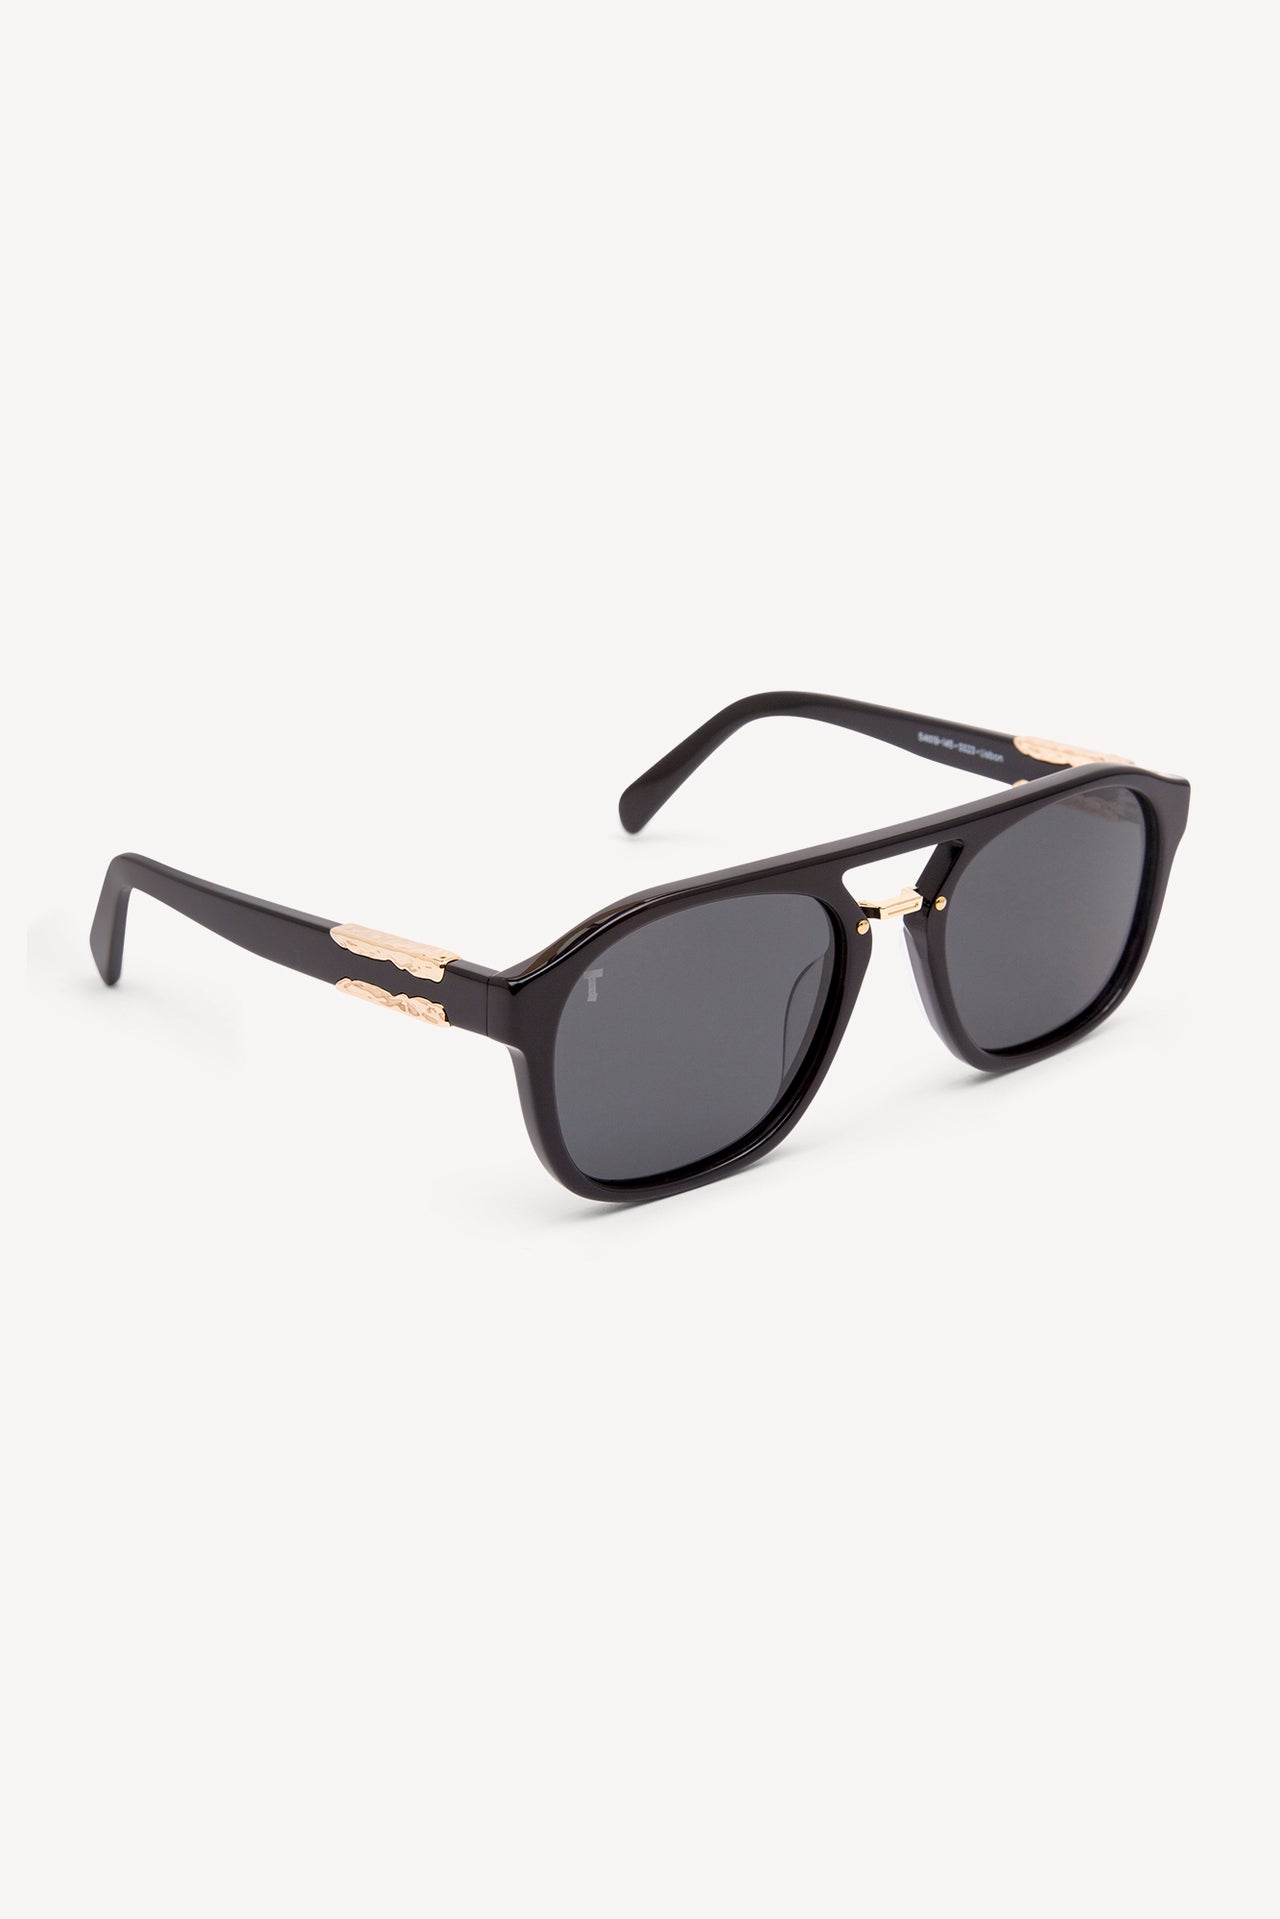 TOATIE Lisbon Aviator Sunglasses BLACK/BLACK